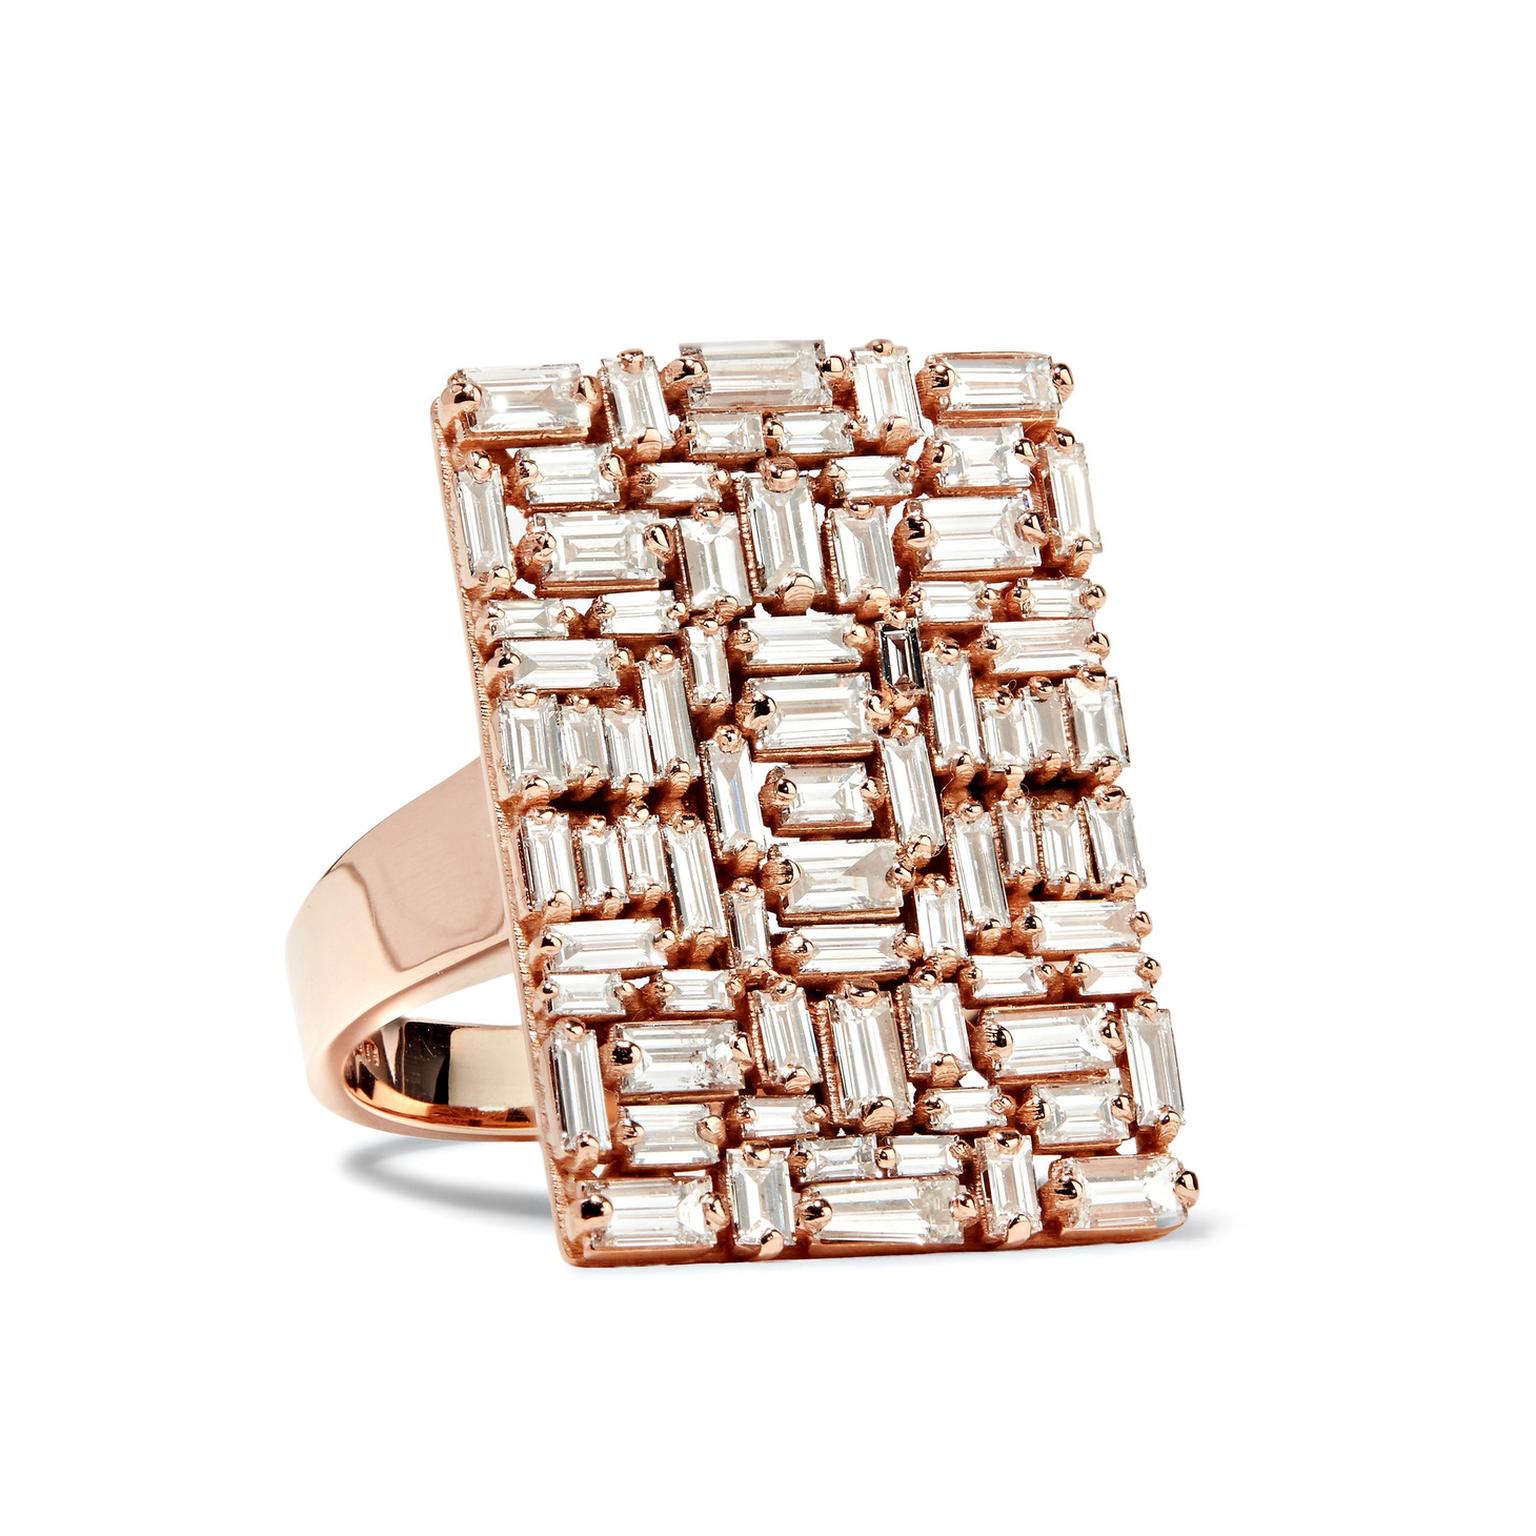 Suzanne Kalan rose gold and diamond geometric ring